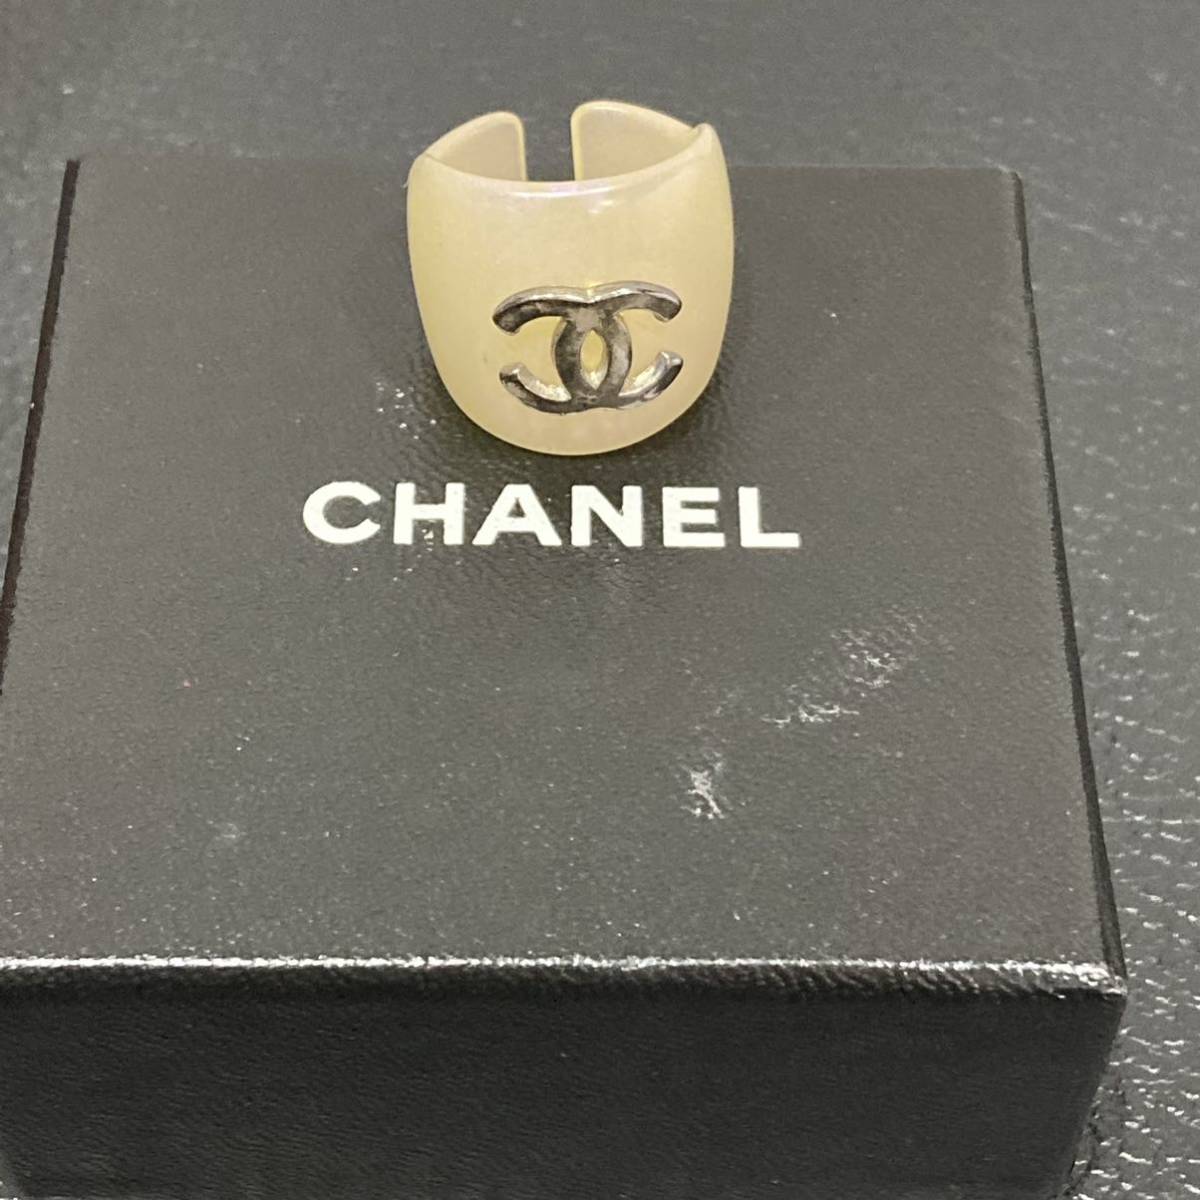 CHANEL シャネル アクセサリー 小物 ココマーク リング 指輪 レディース アイテム おしゃれ 箱付き ファッション ブランド かわいい